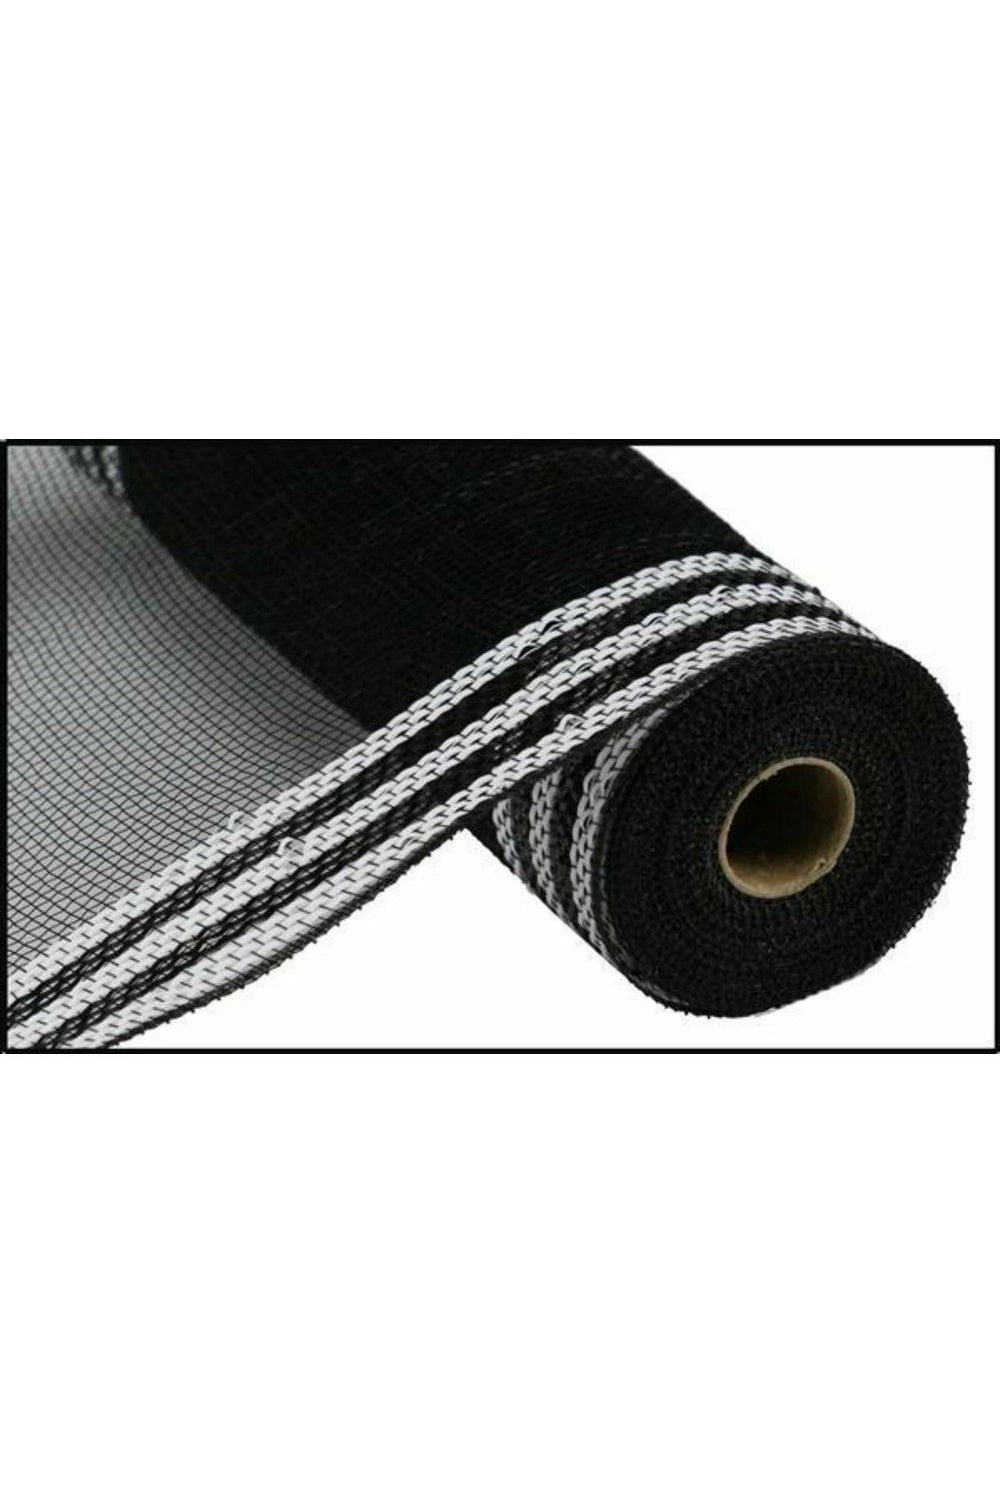 Shop For 10.5" Border Stripe Metallic Mesh: Black/White (10 Yards) RY850362